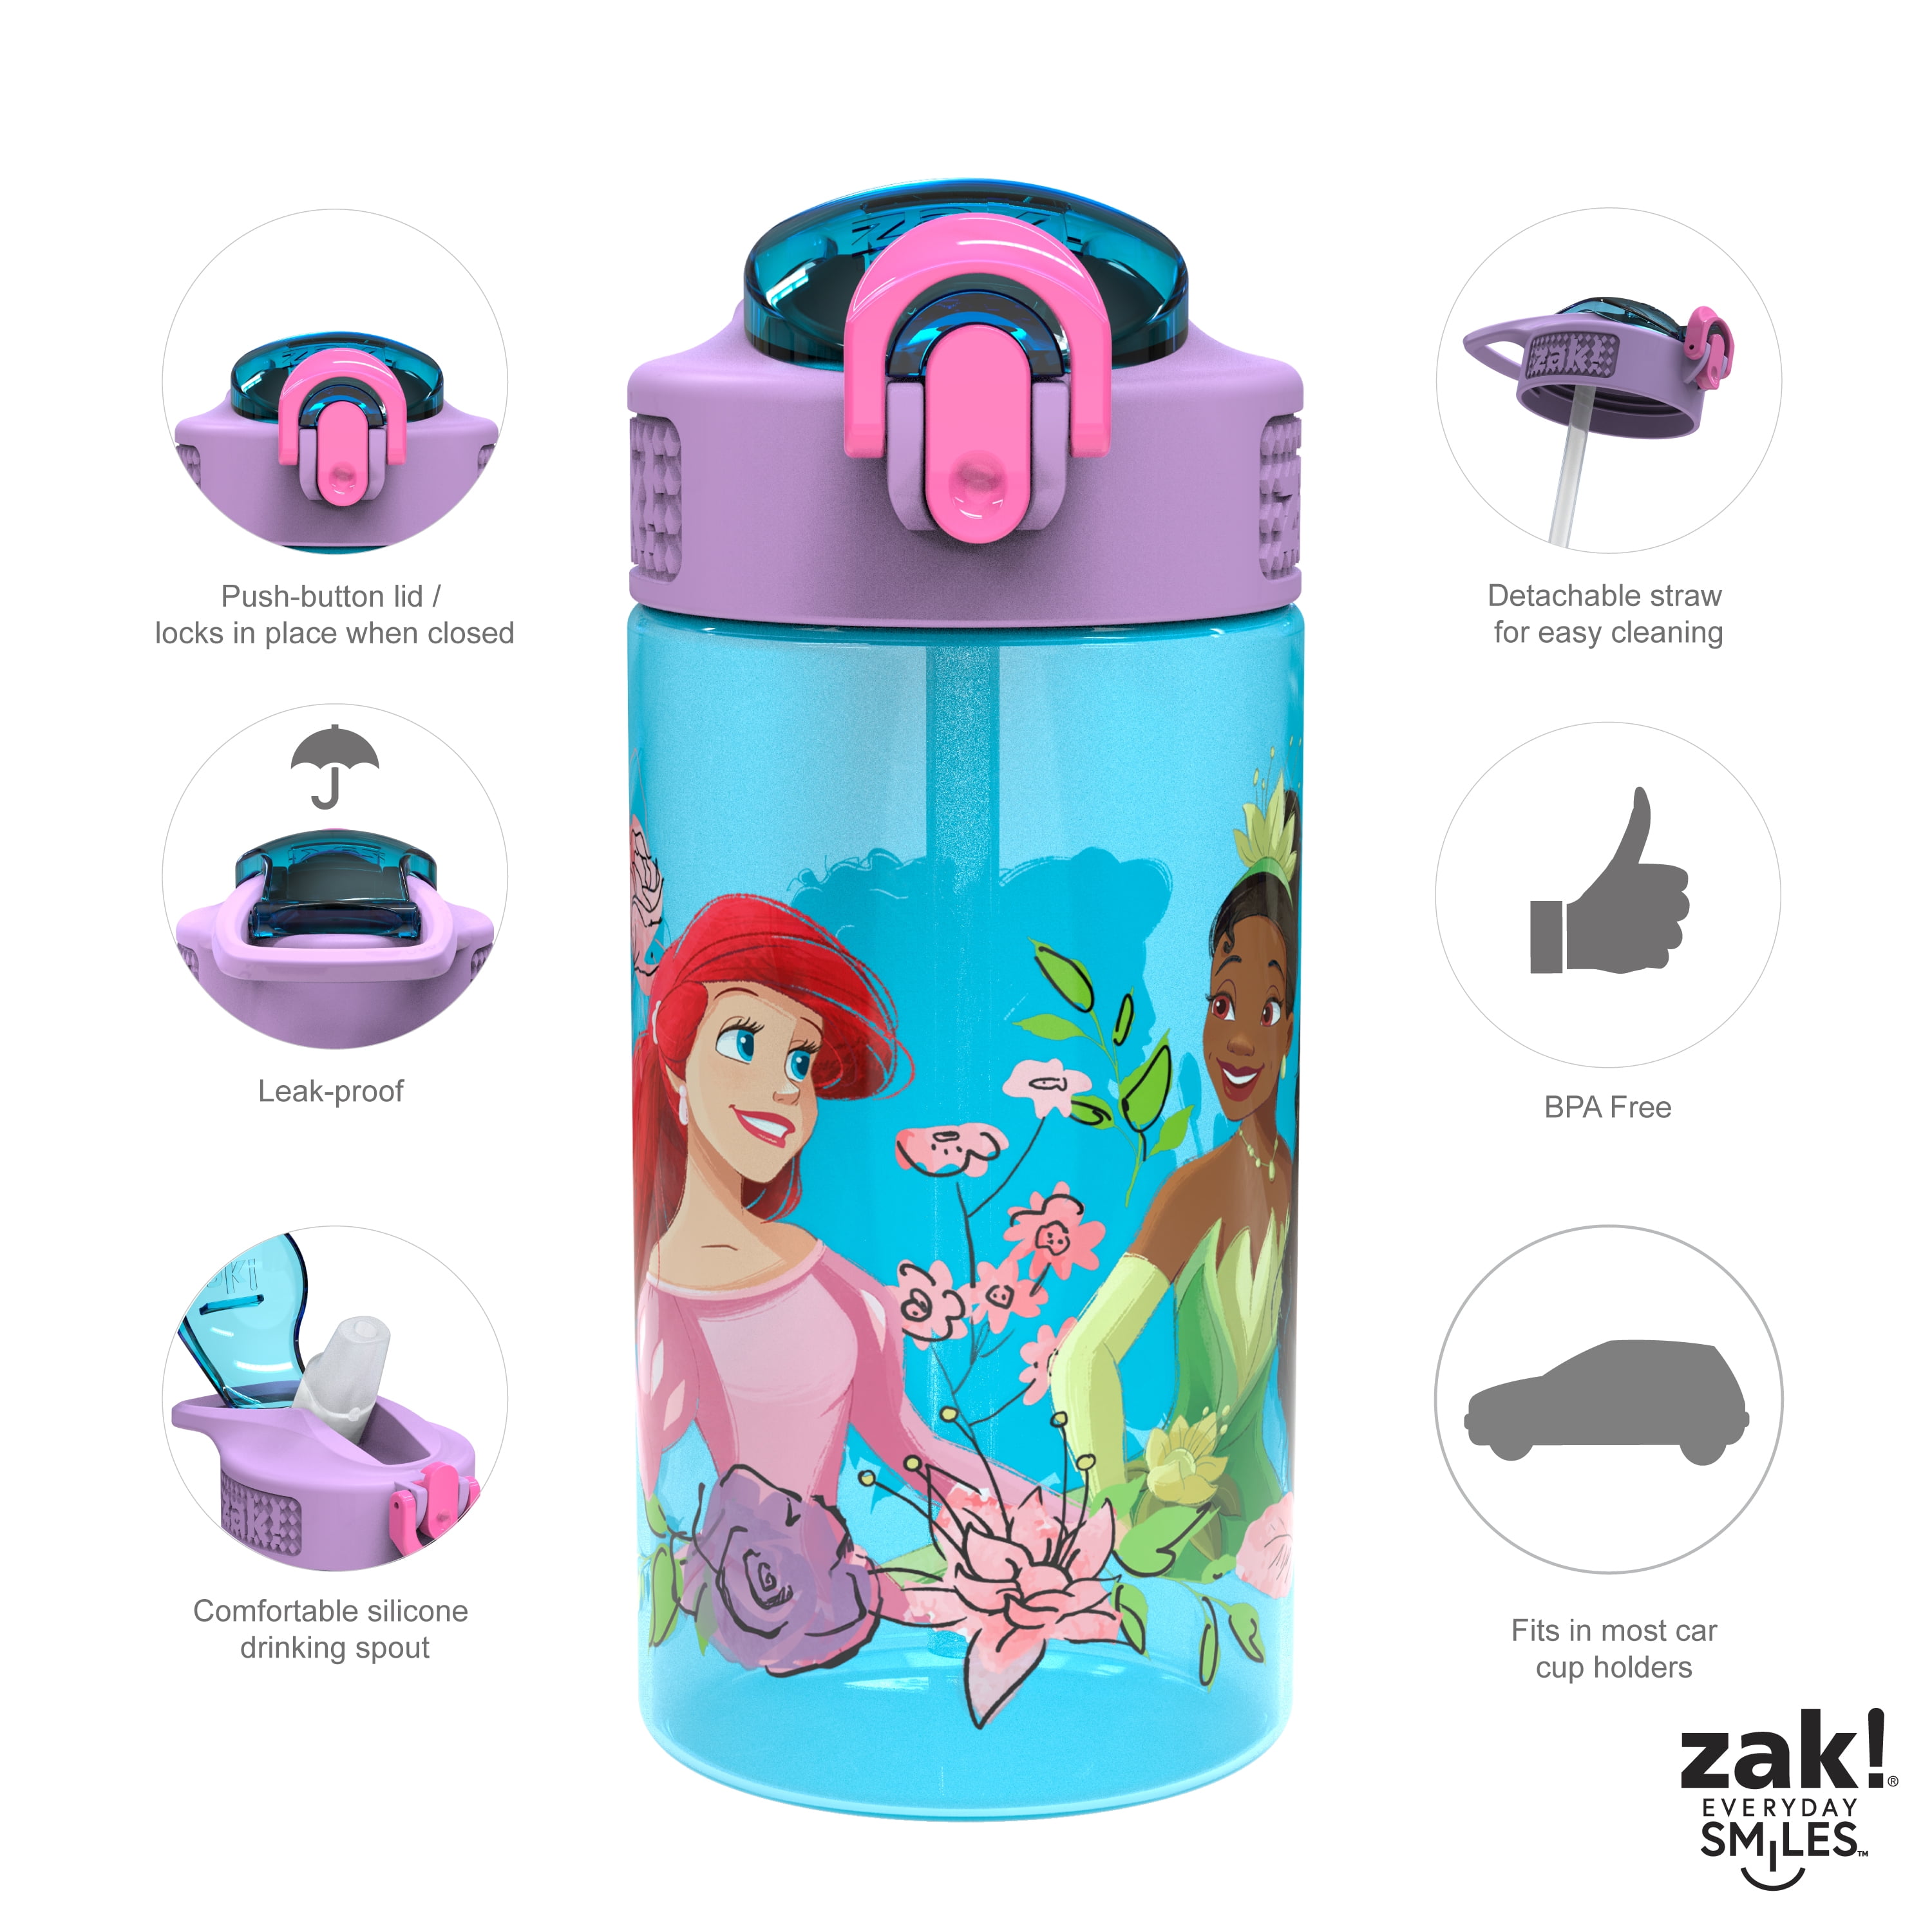 Zak Designs Disney100 Kids Water Bottle For School or Travel 16oz